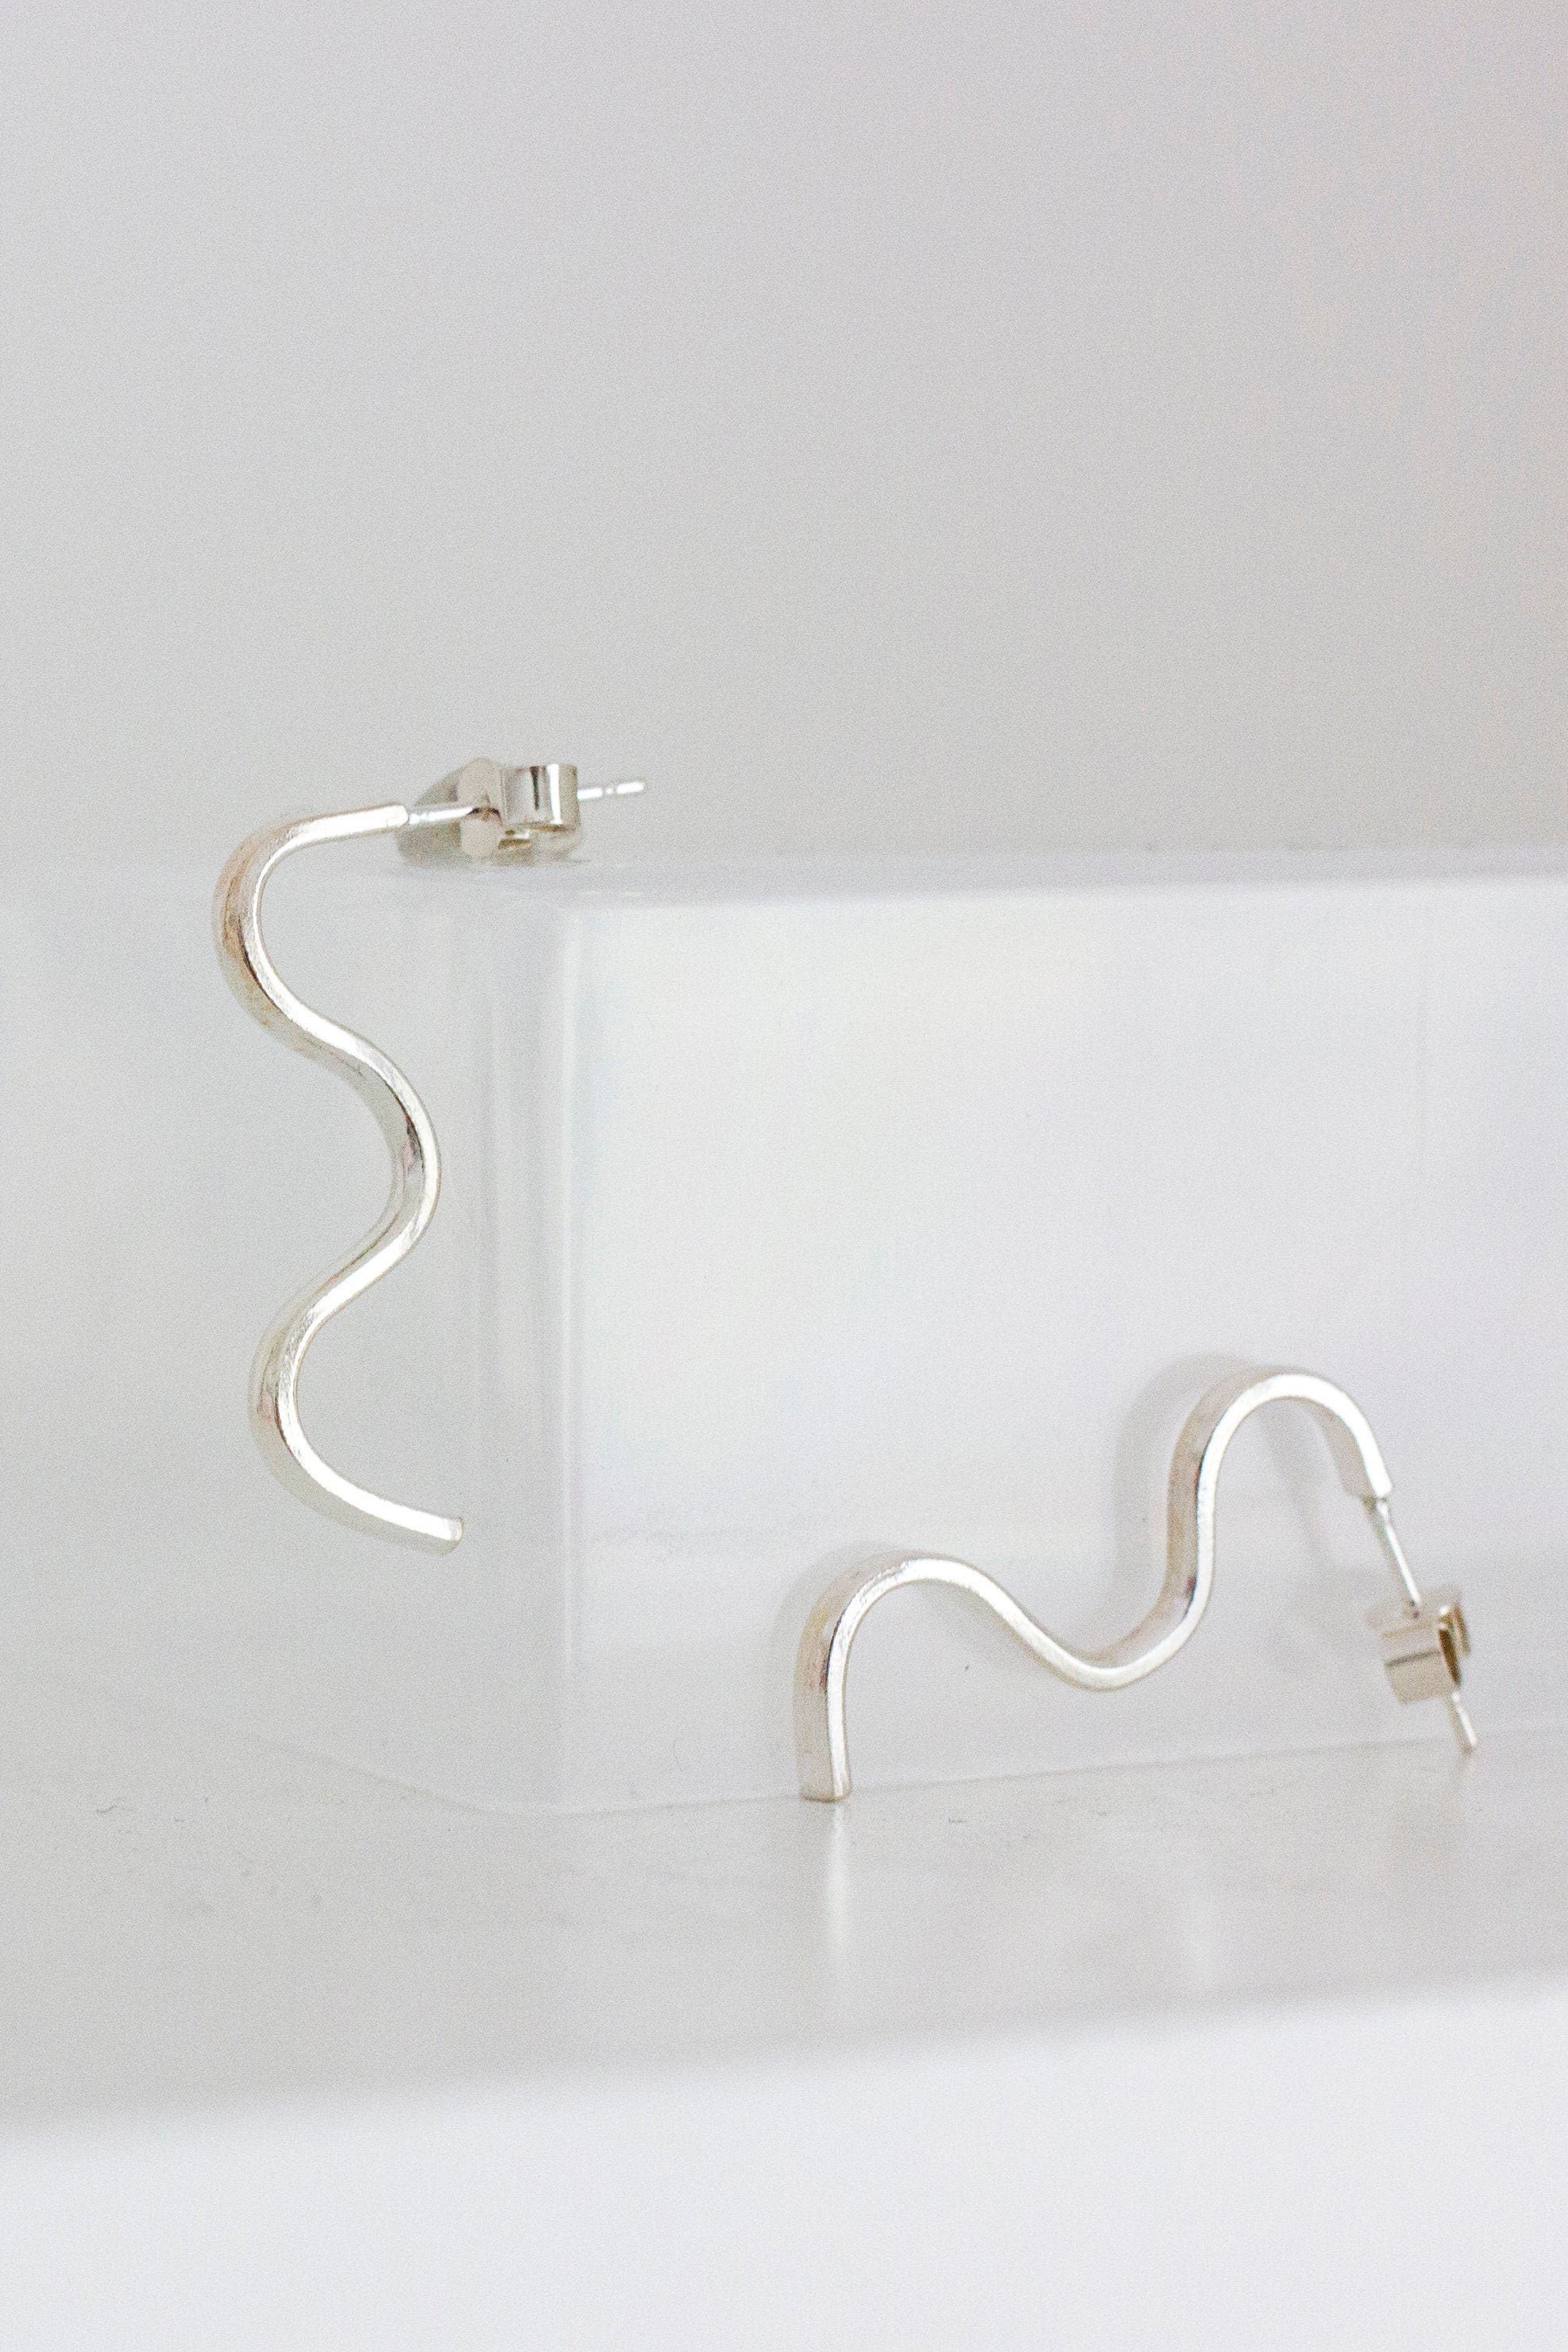 Wiggle Stud Earrings Sterling Silver - Minimalist Handmade Geometric Jewellery